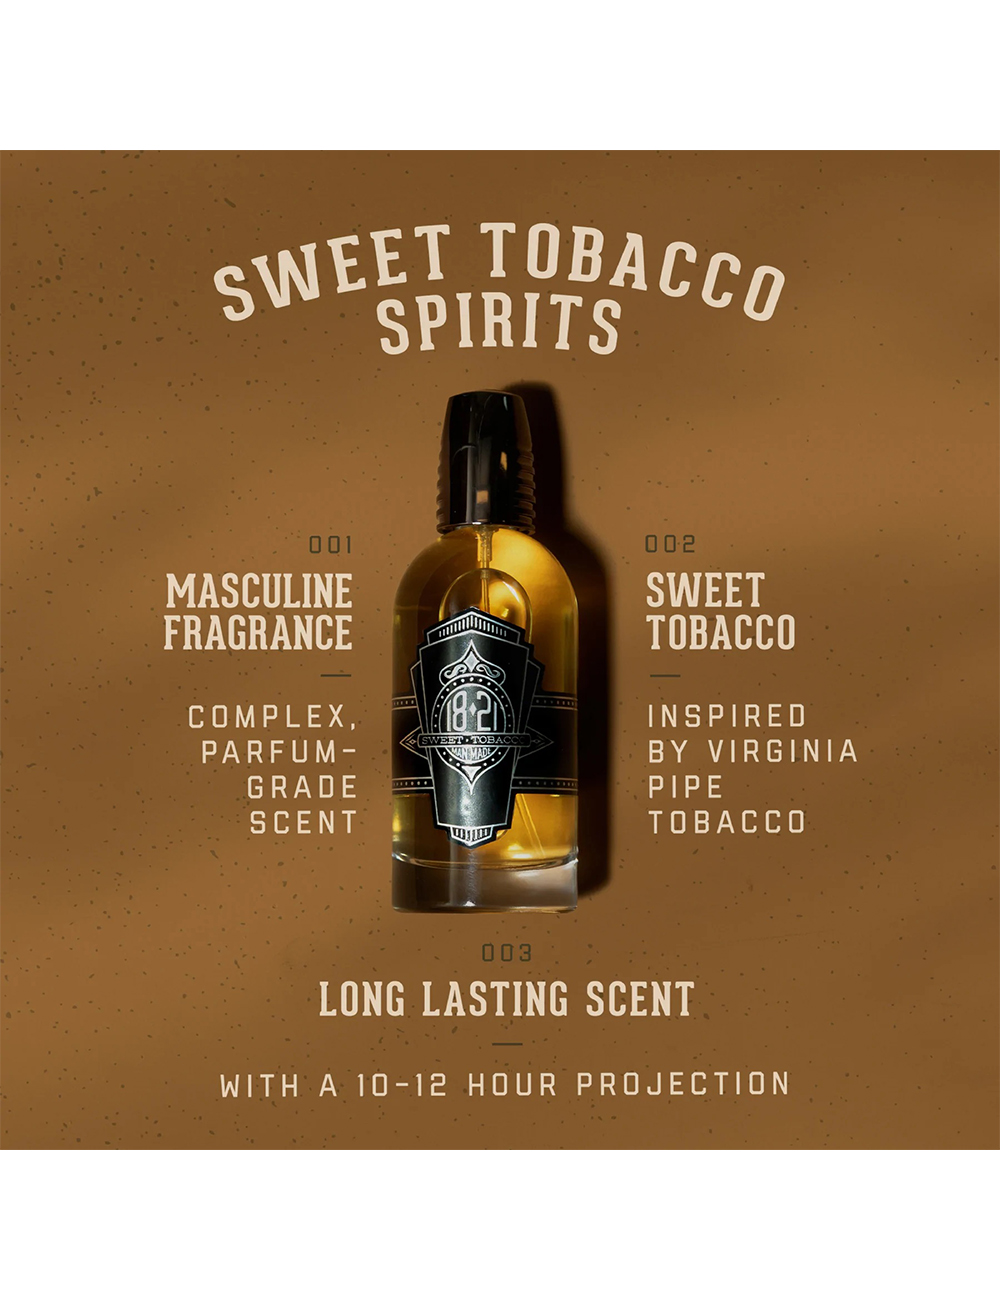 18.21 Man Made Sweet Tobacco Spirits 100ml - Slick Styles